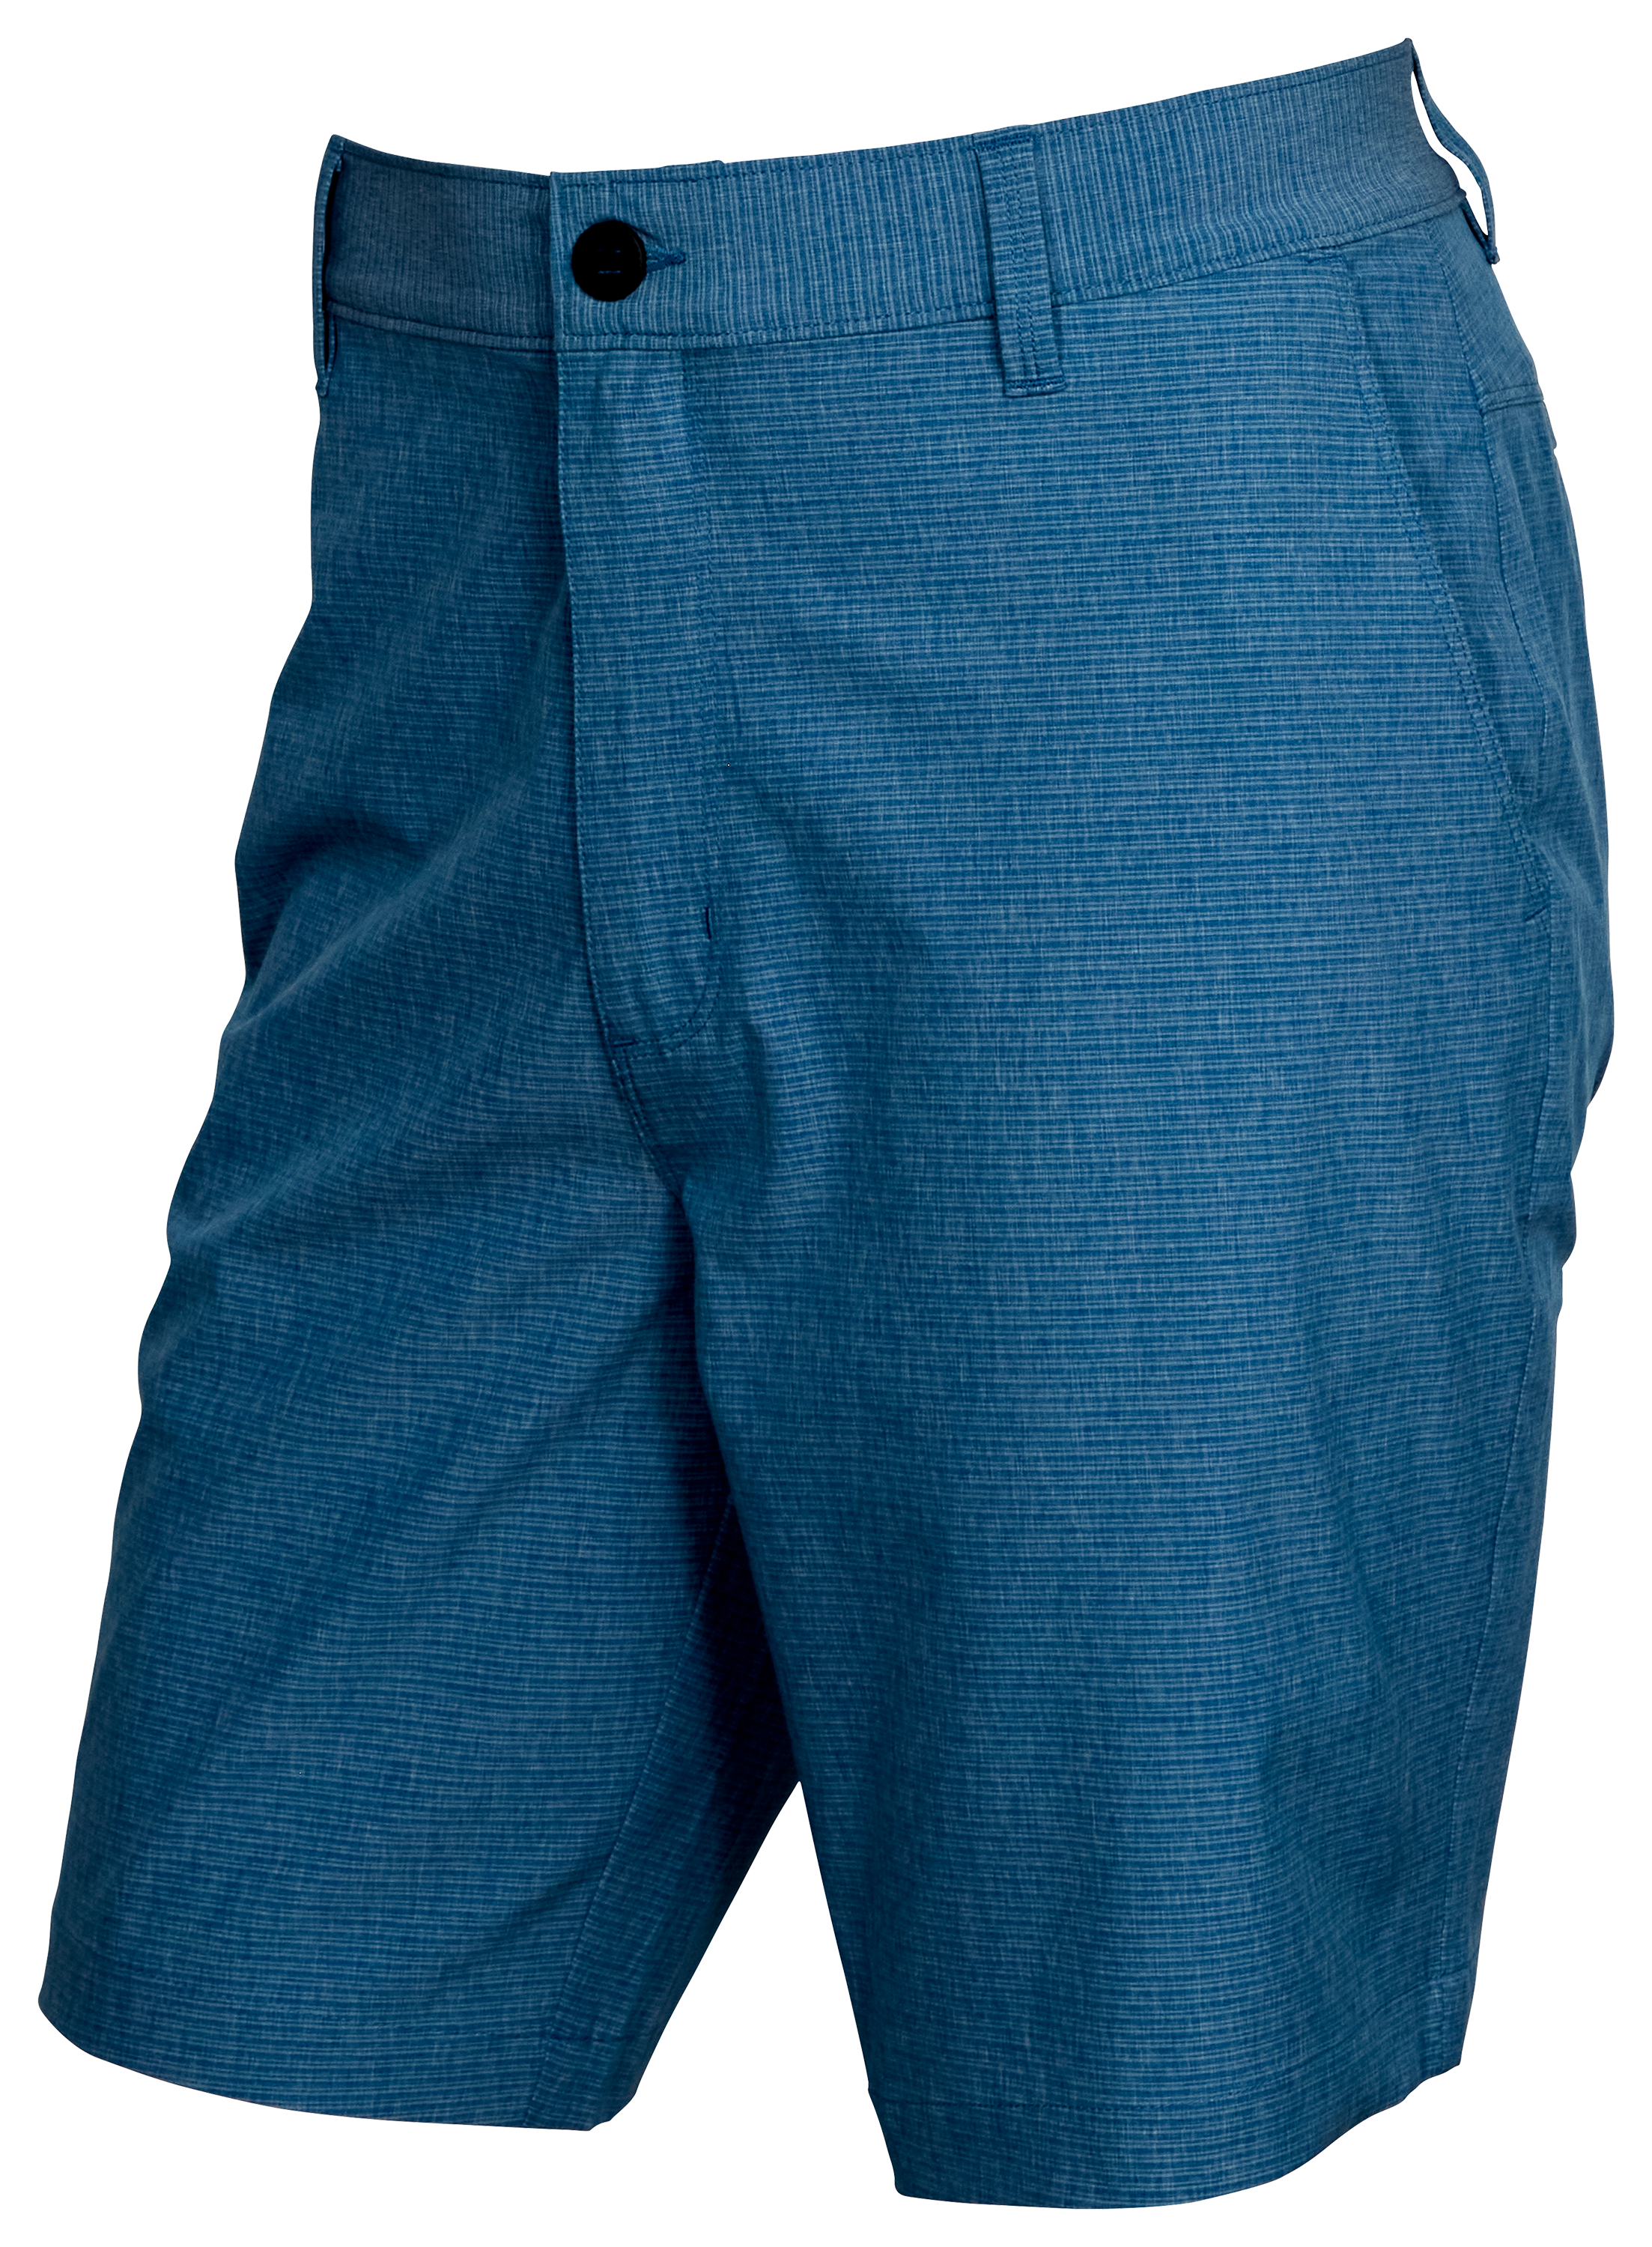 World Wide Sportsman Pescador Stretch Fishing Shorts for Men - Vallarta Blue Stripe - 40